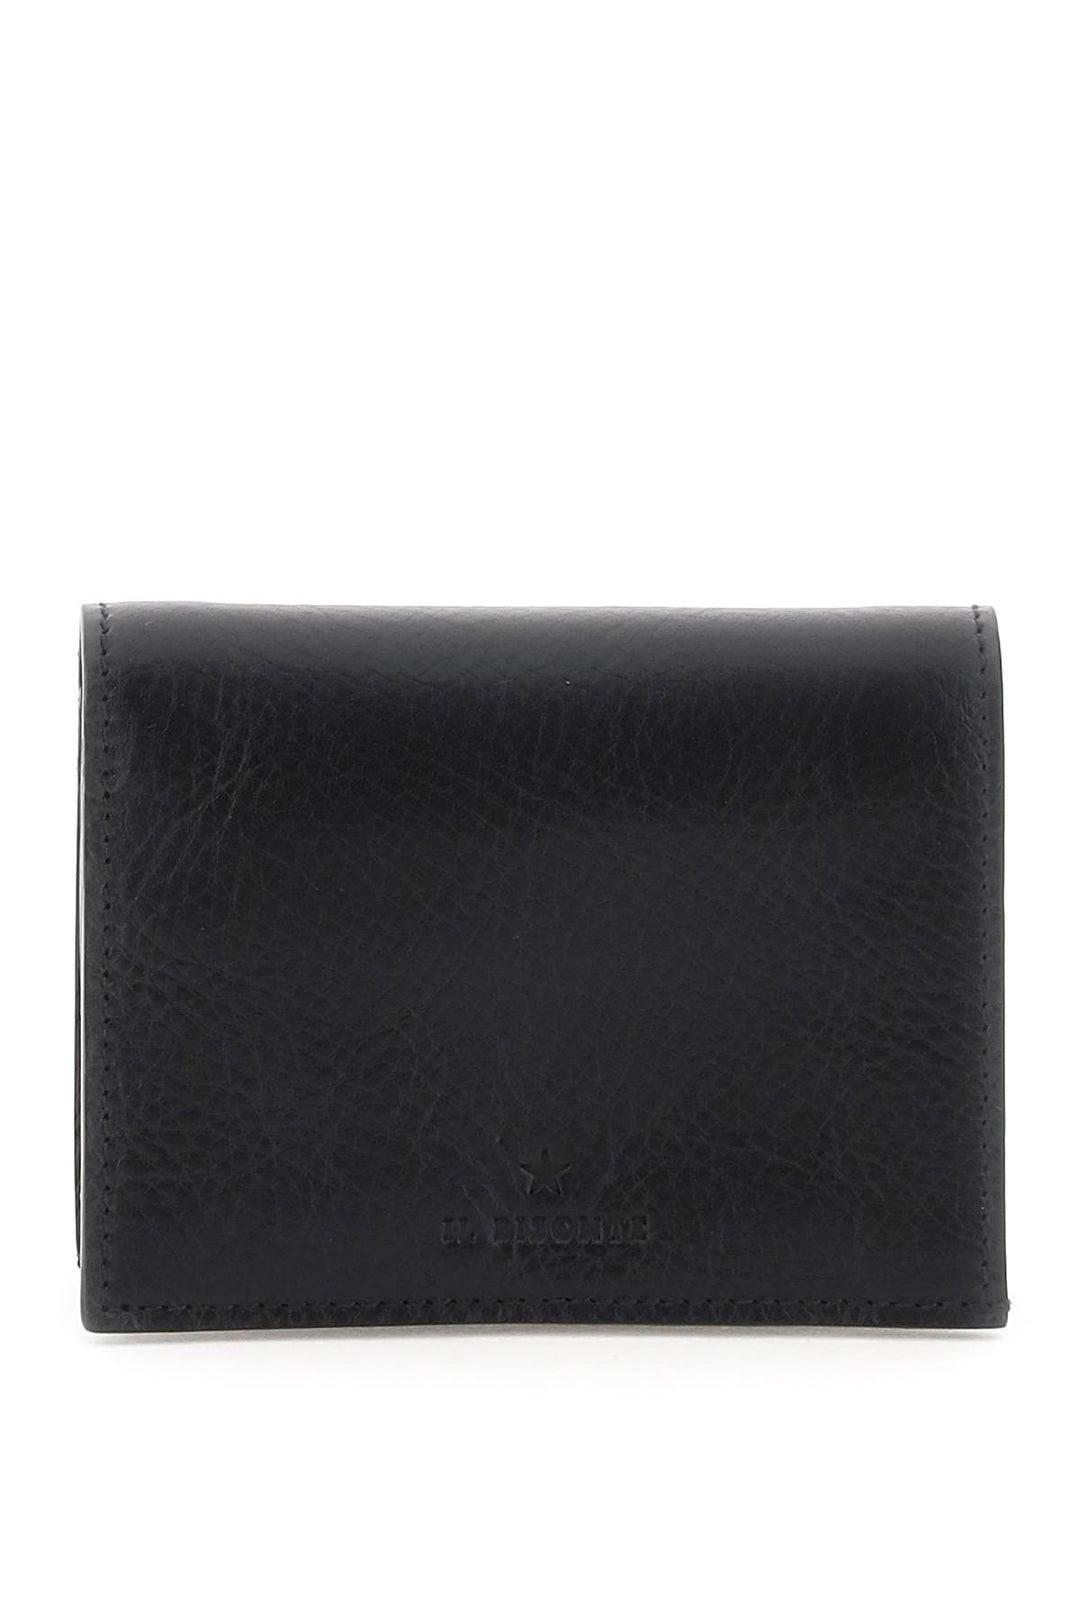 Il bisonte leather wallet-0